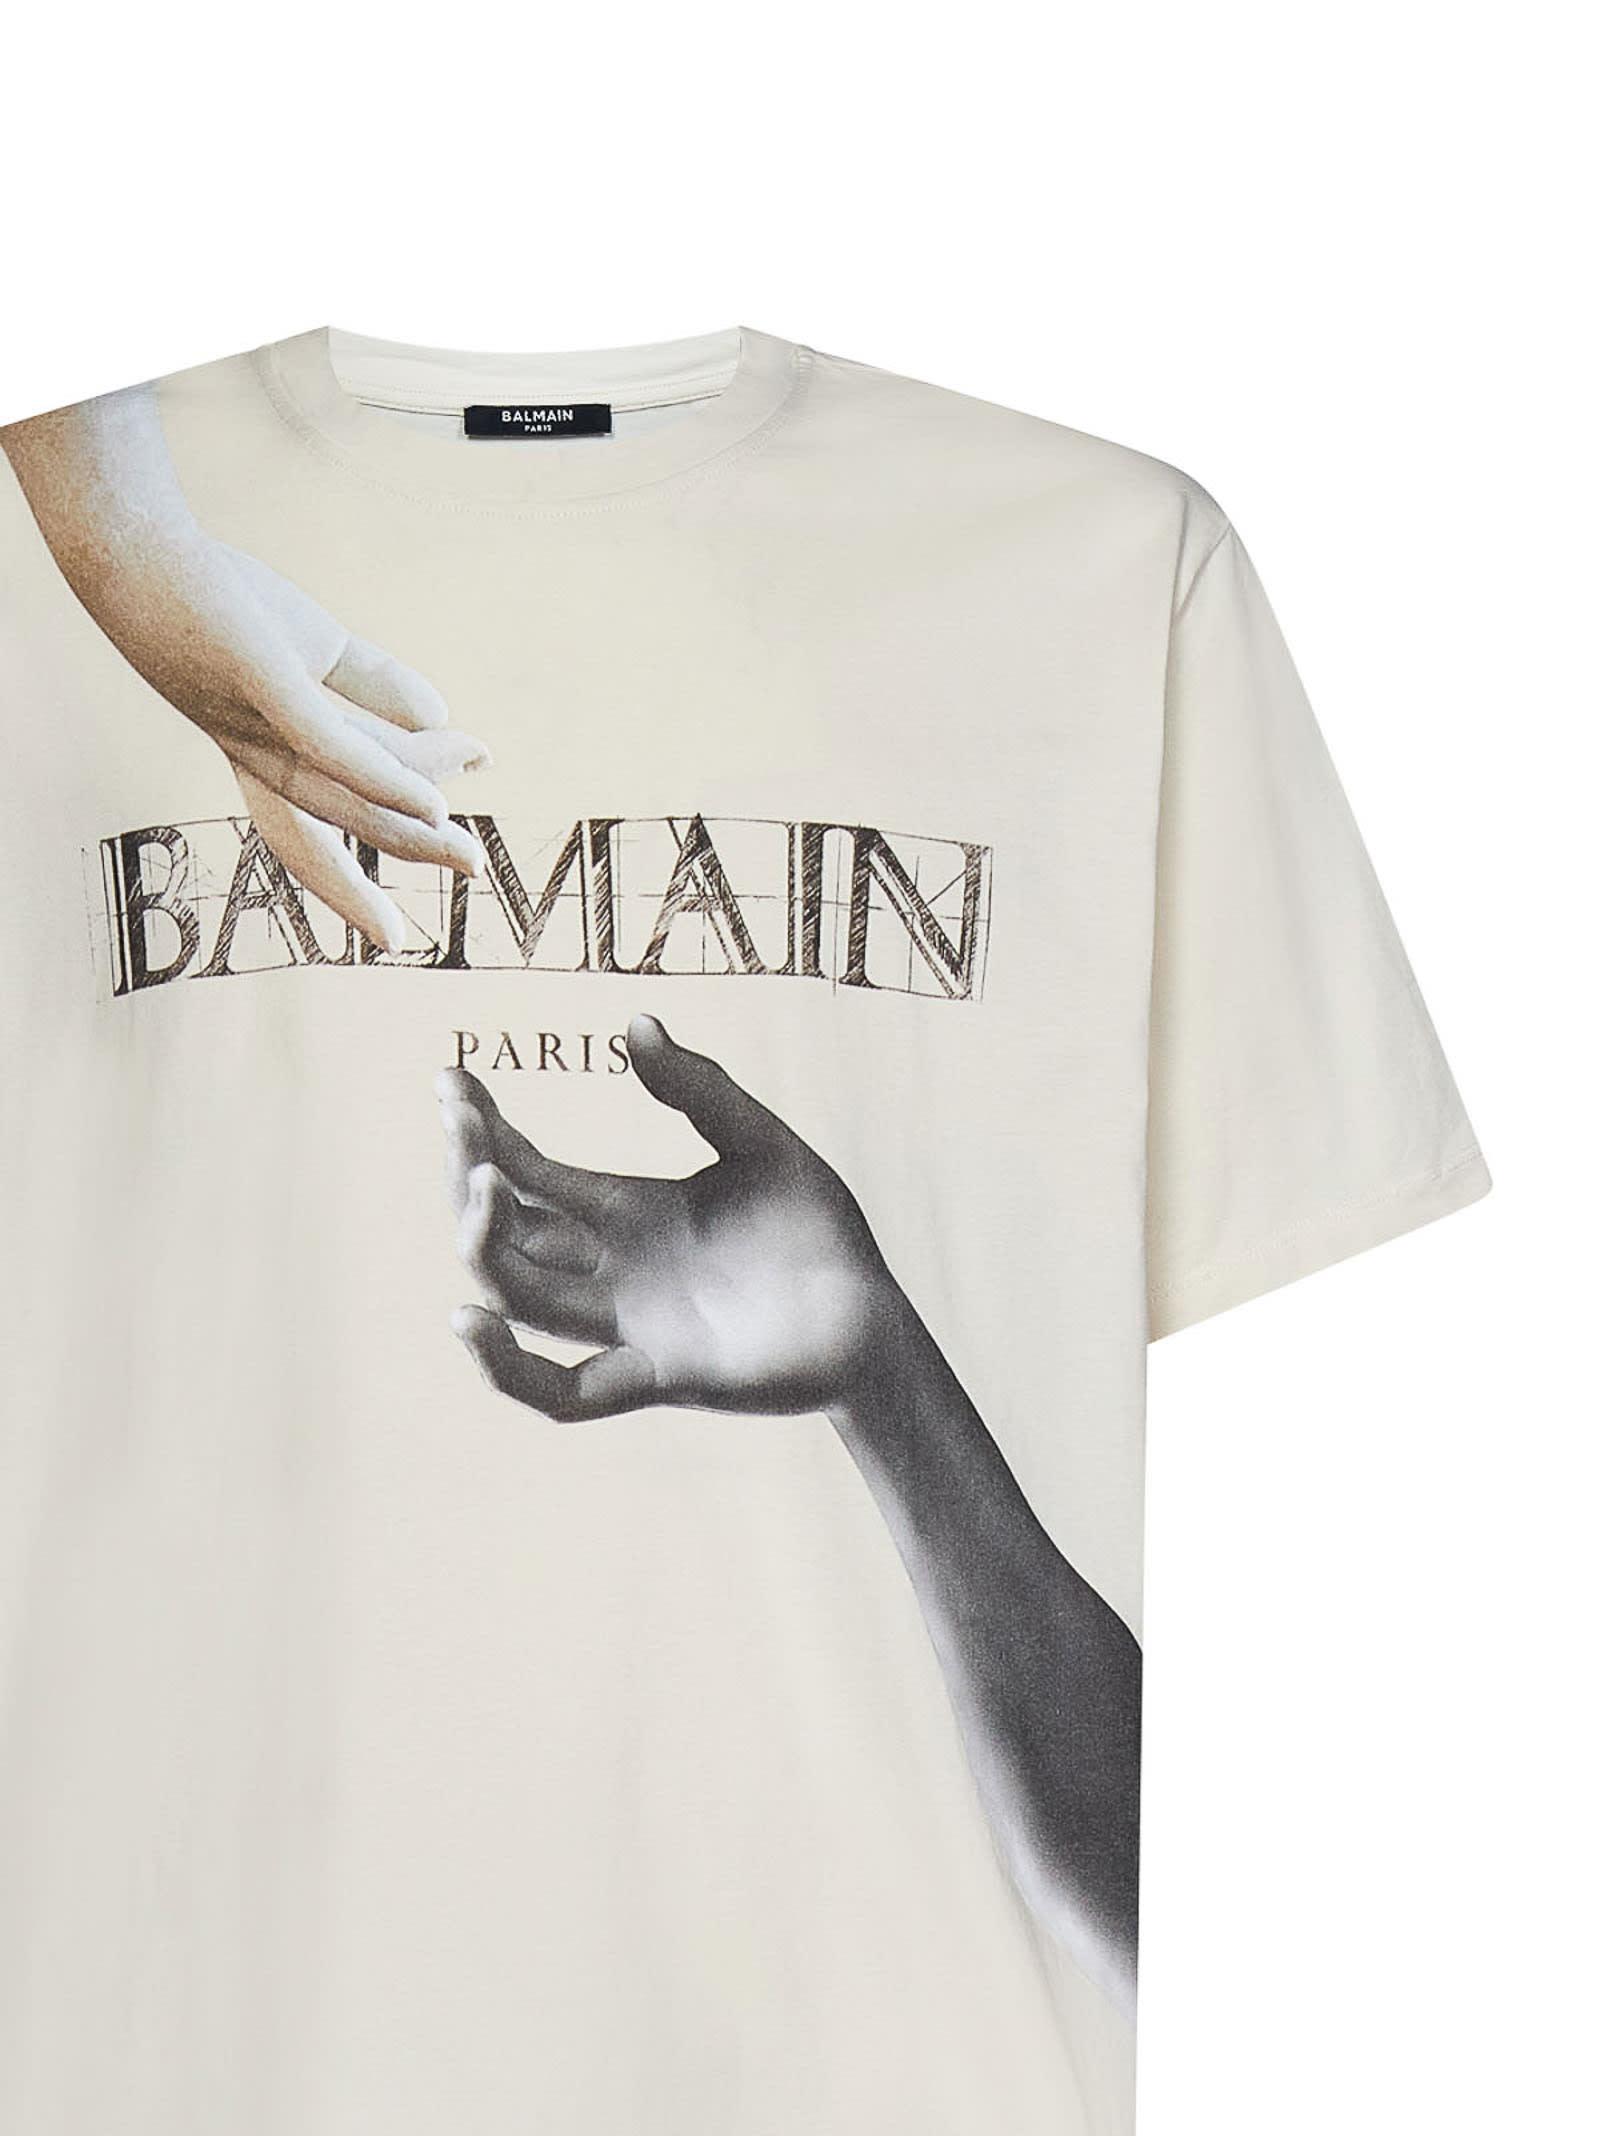 Balmain Paris T-shirt in White for Men | Lyst